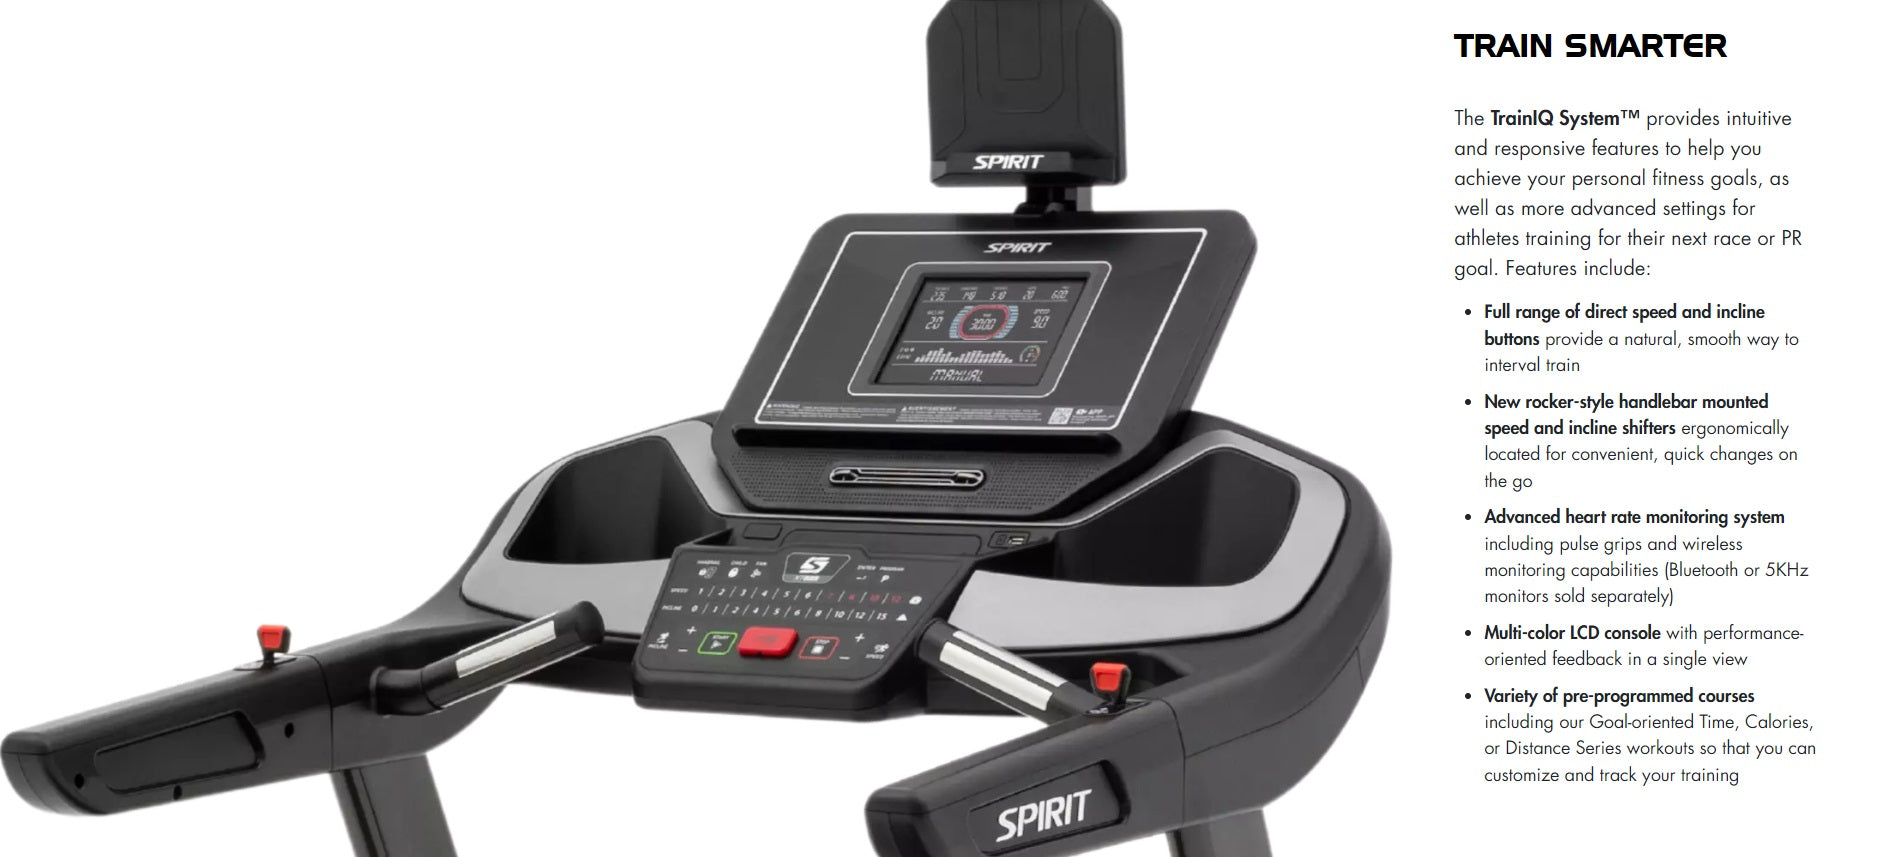 Spirit XT685 Treadmill benefits